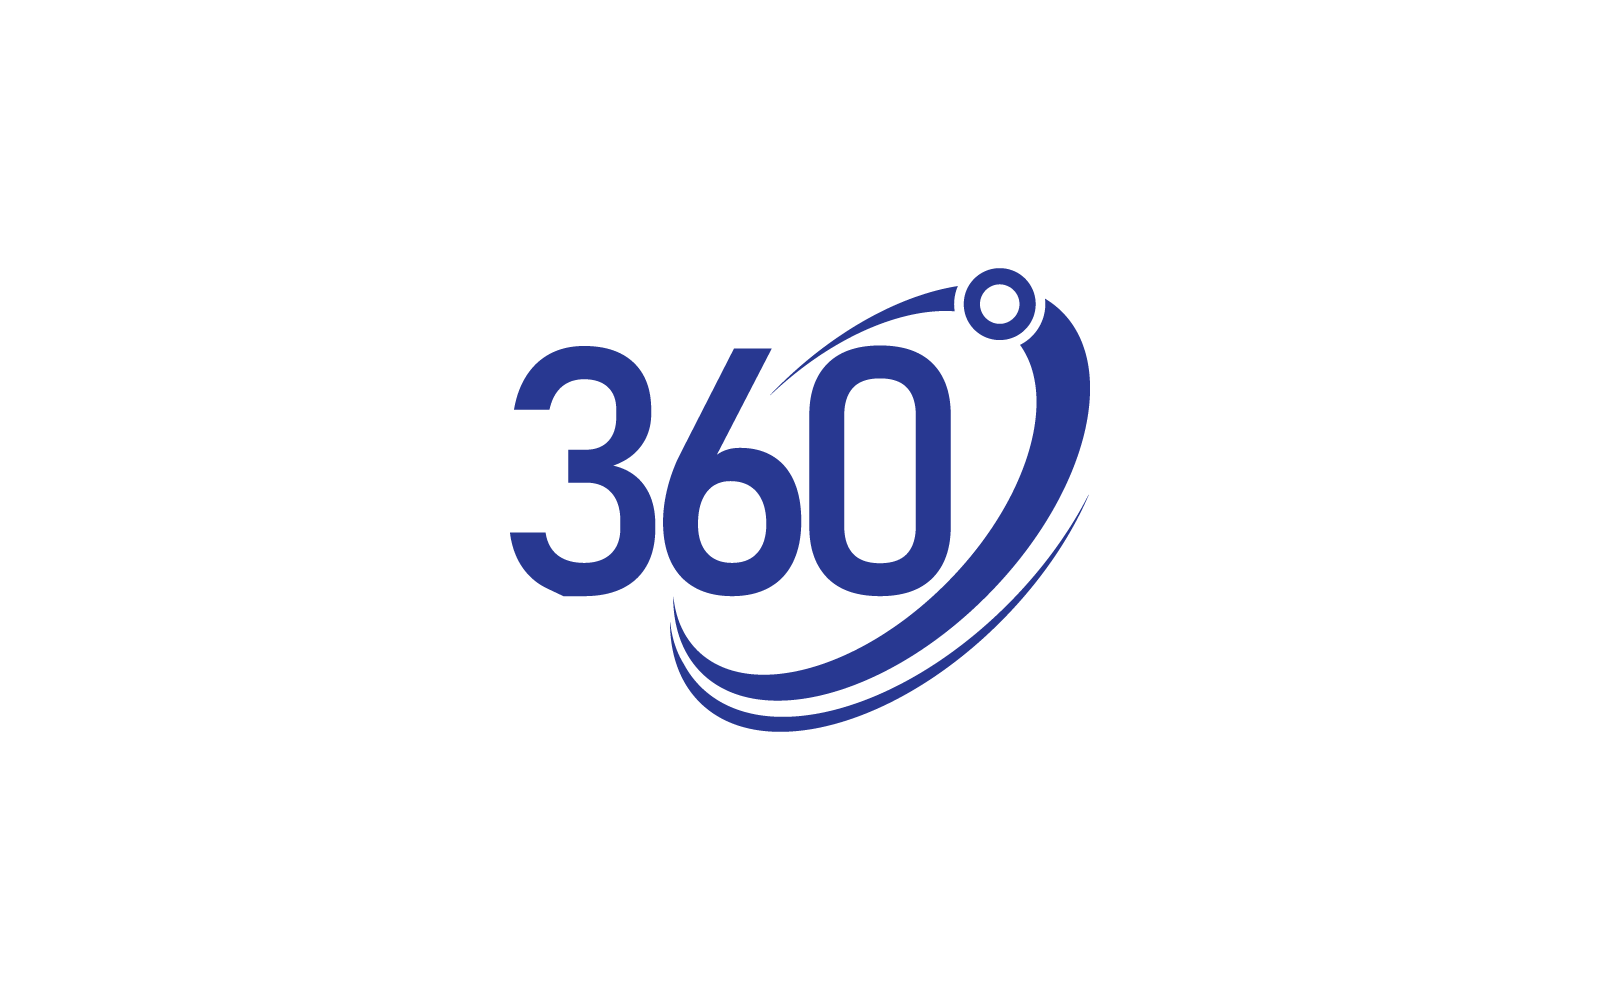 360 view logo icon vector flat design